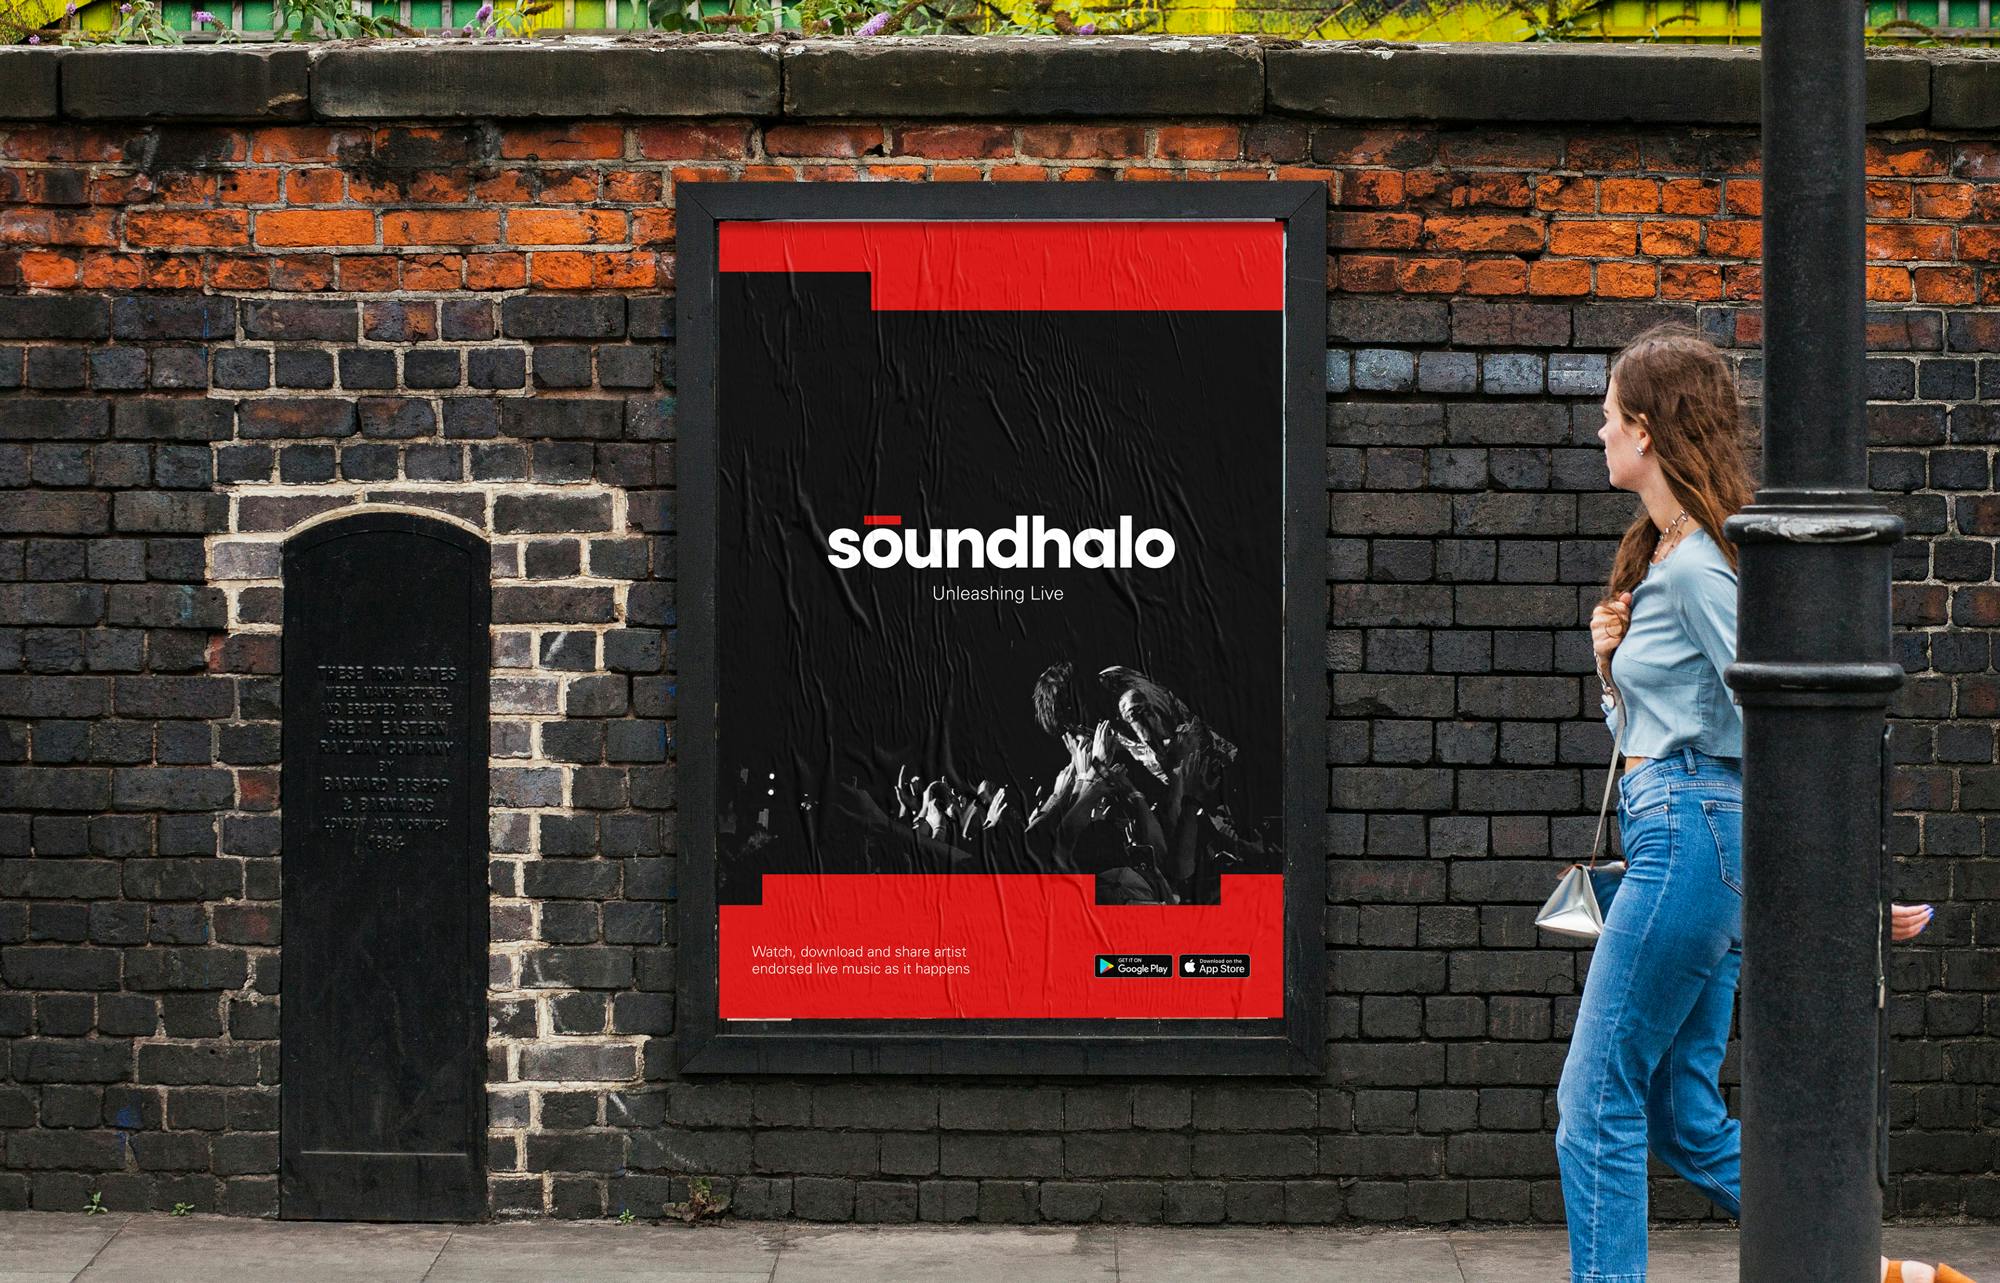 Soundhalo Brand Identity designed by Extract Studio